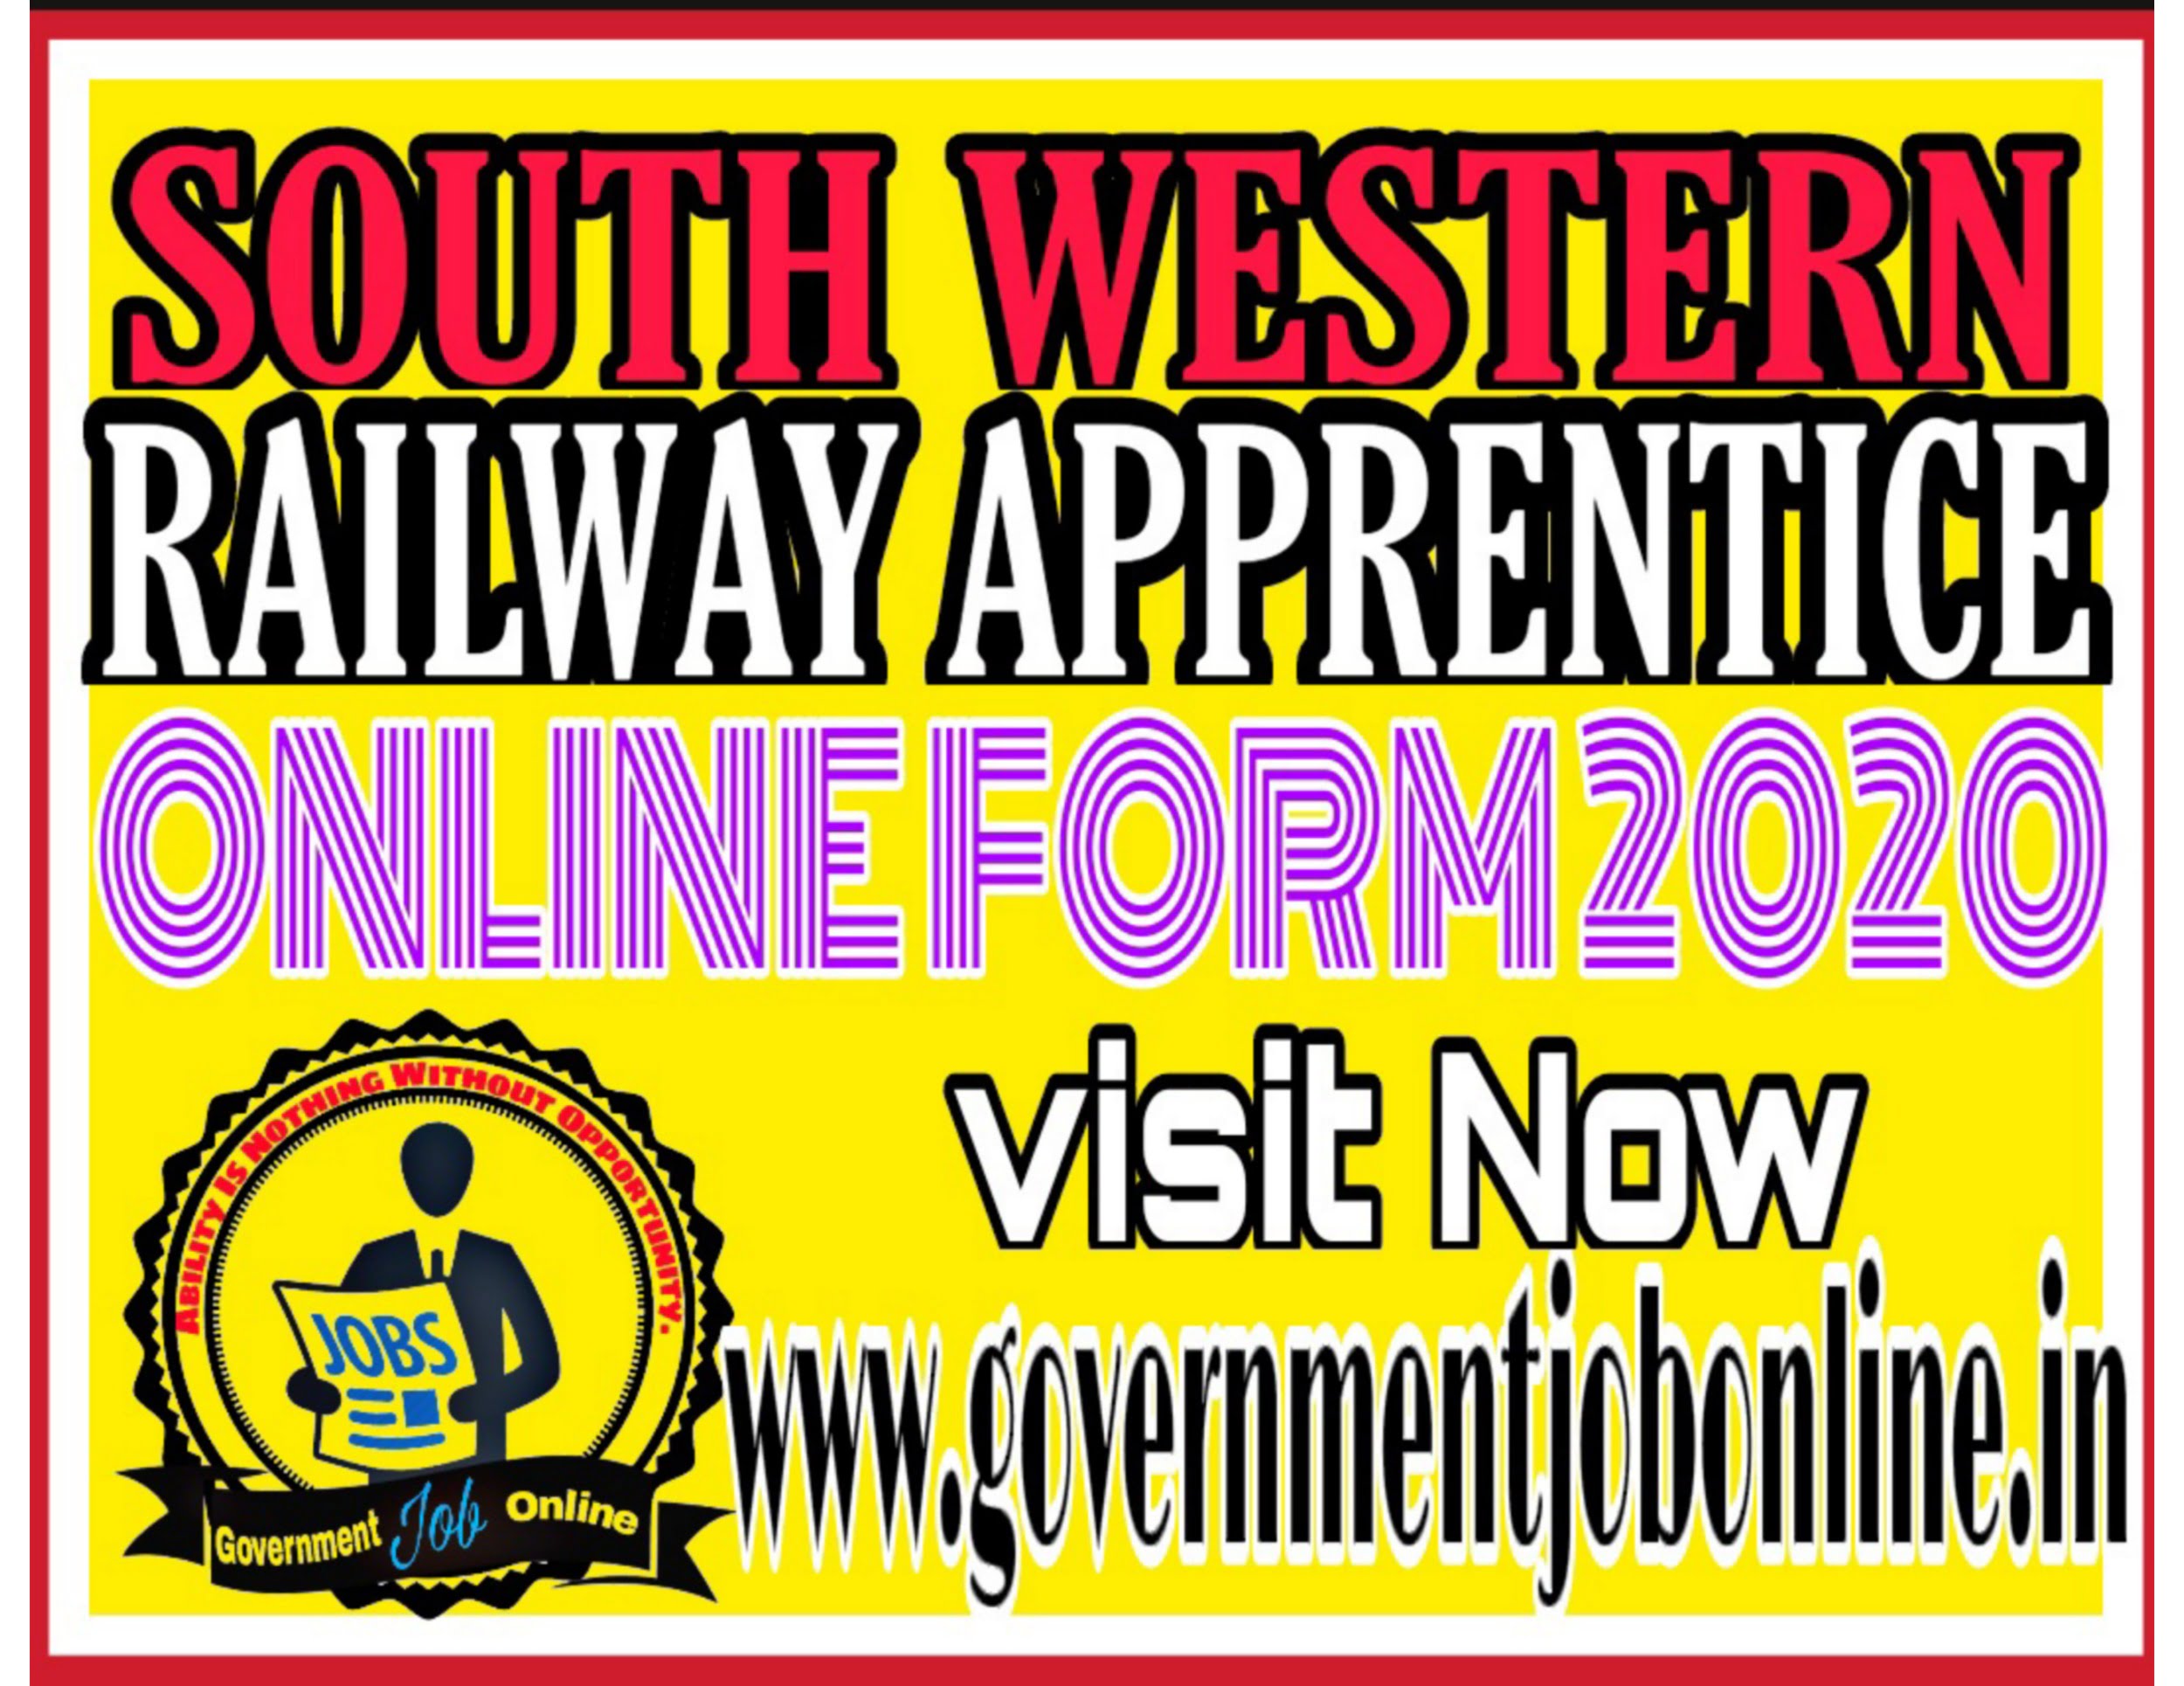 Railway SWR Apprentice Online Form 2020